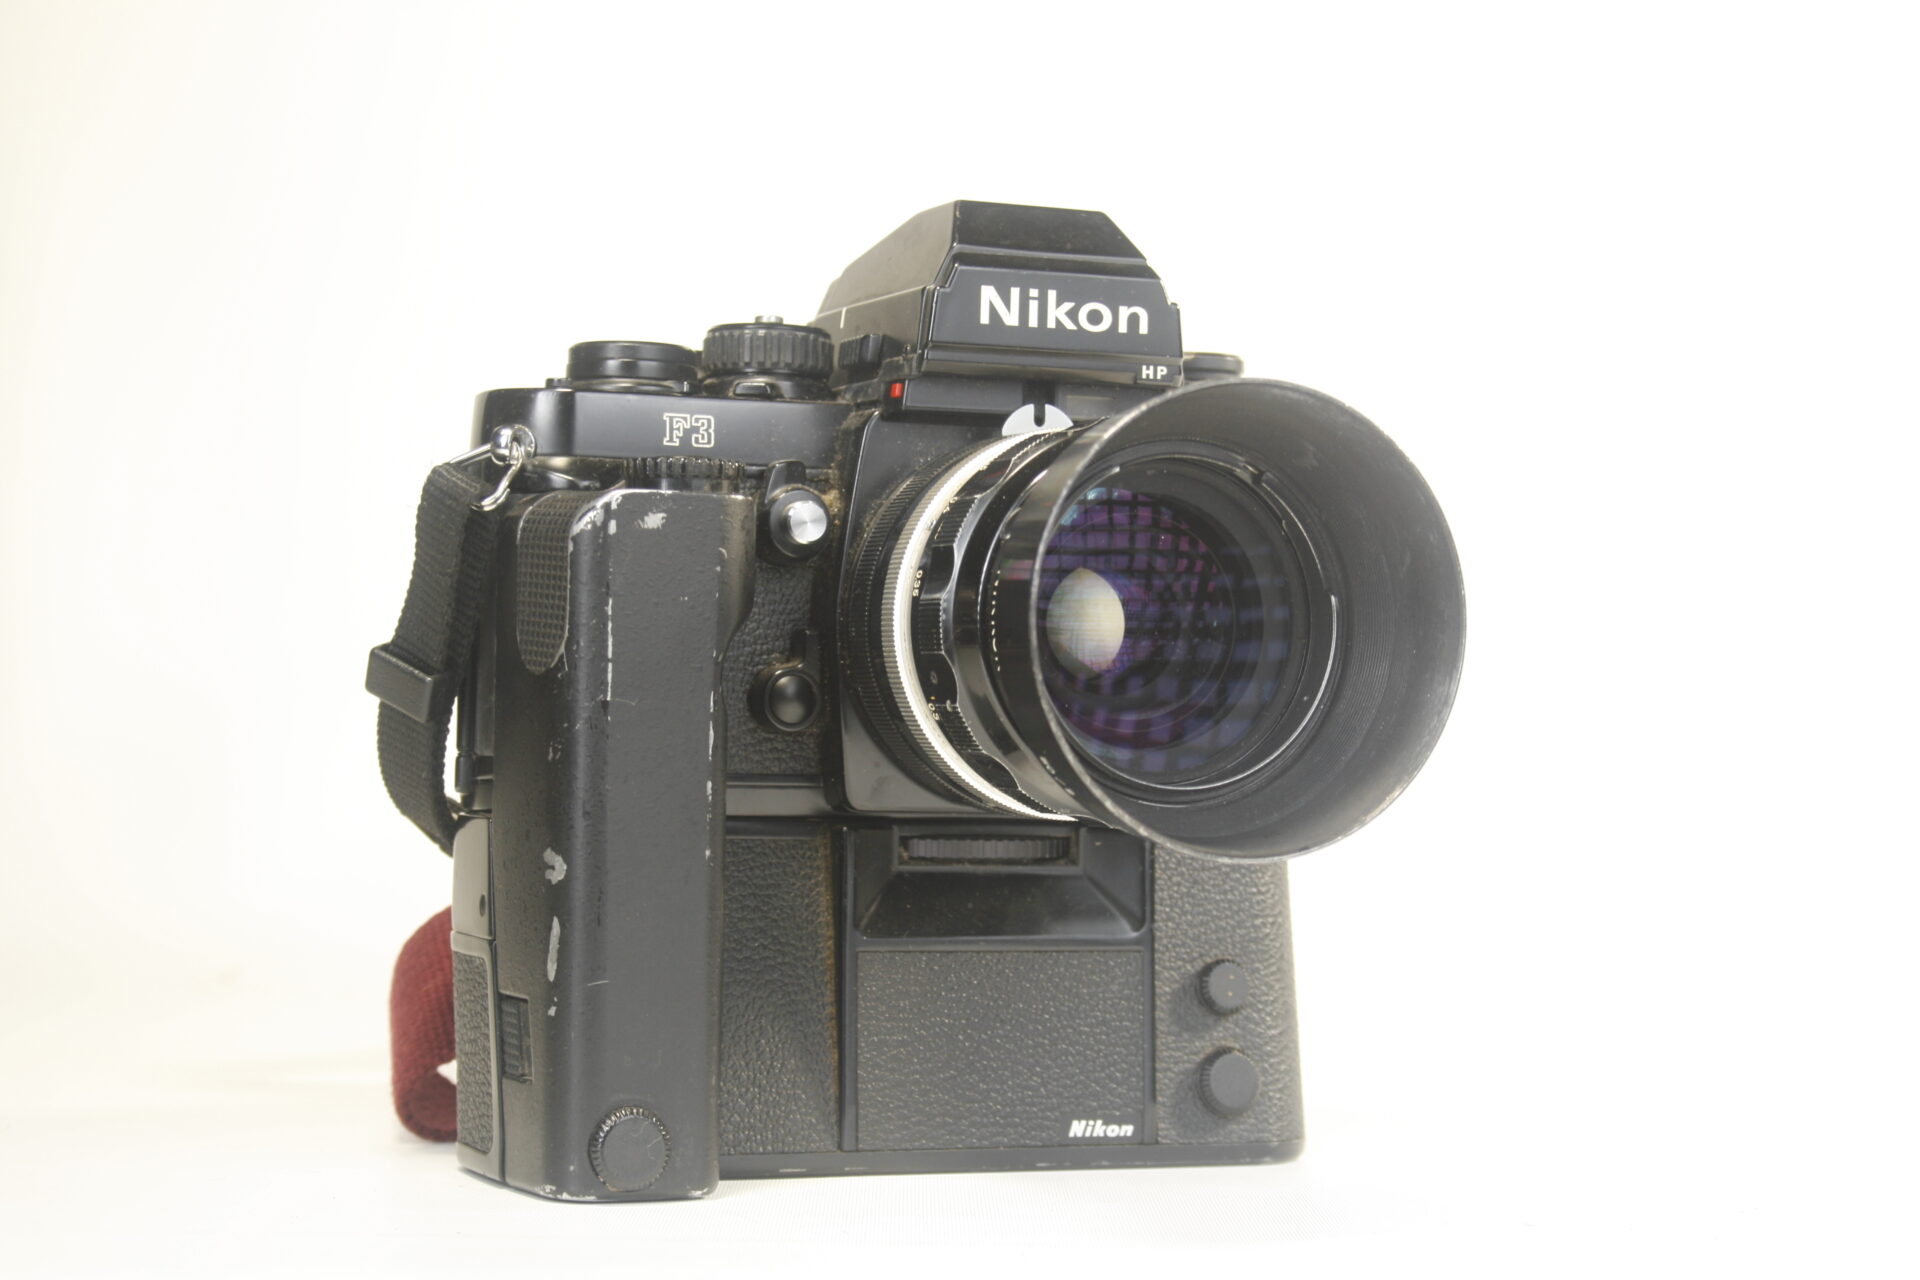 Nikon F3. 35mm SLR camera met MD-4 motor drive. 1980. Japan